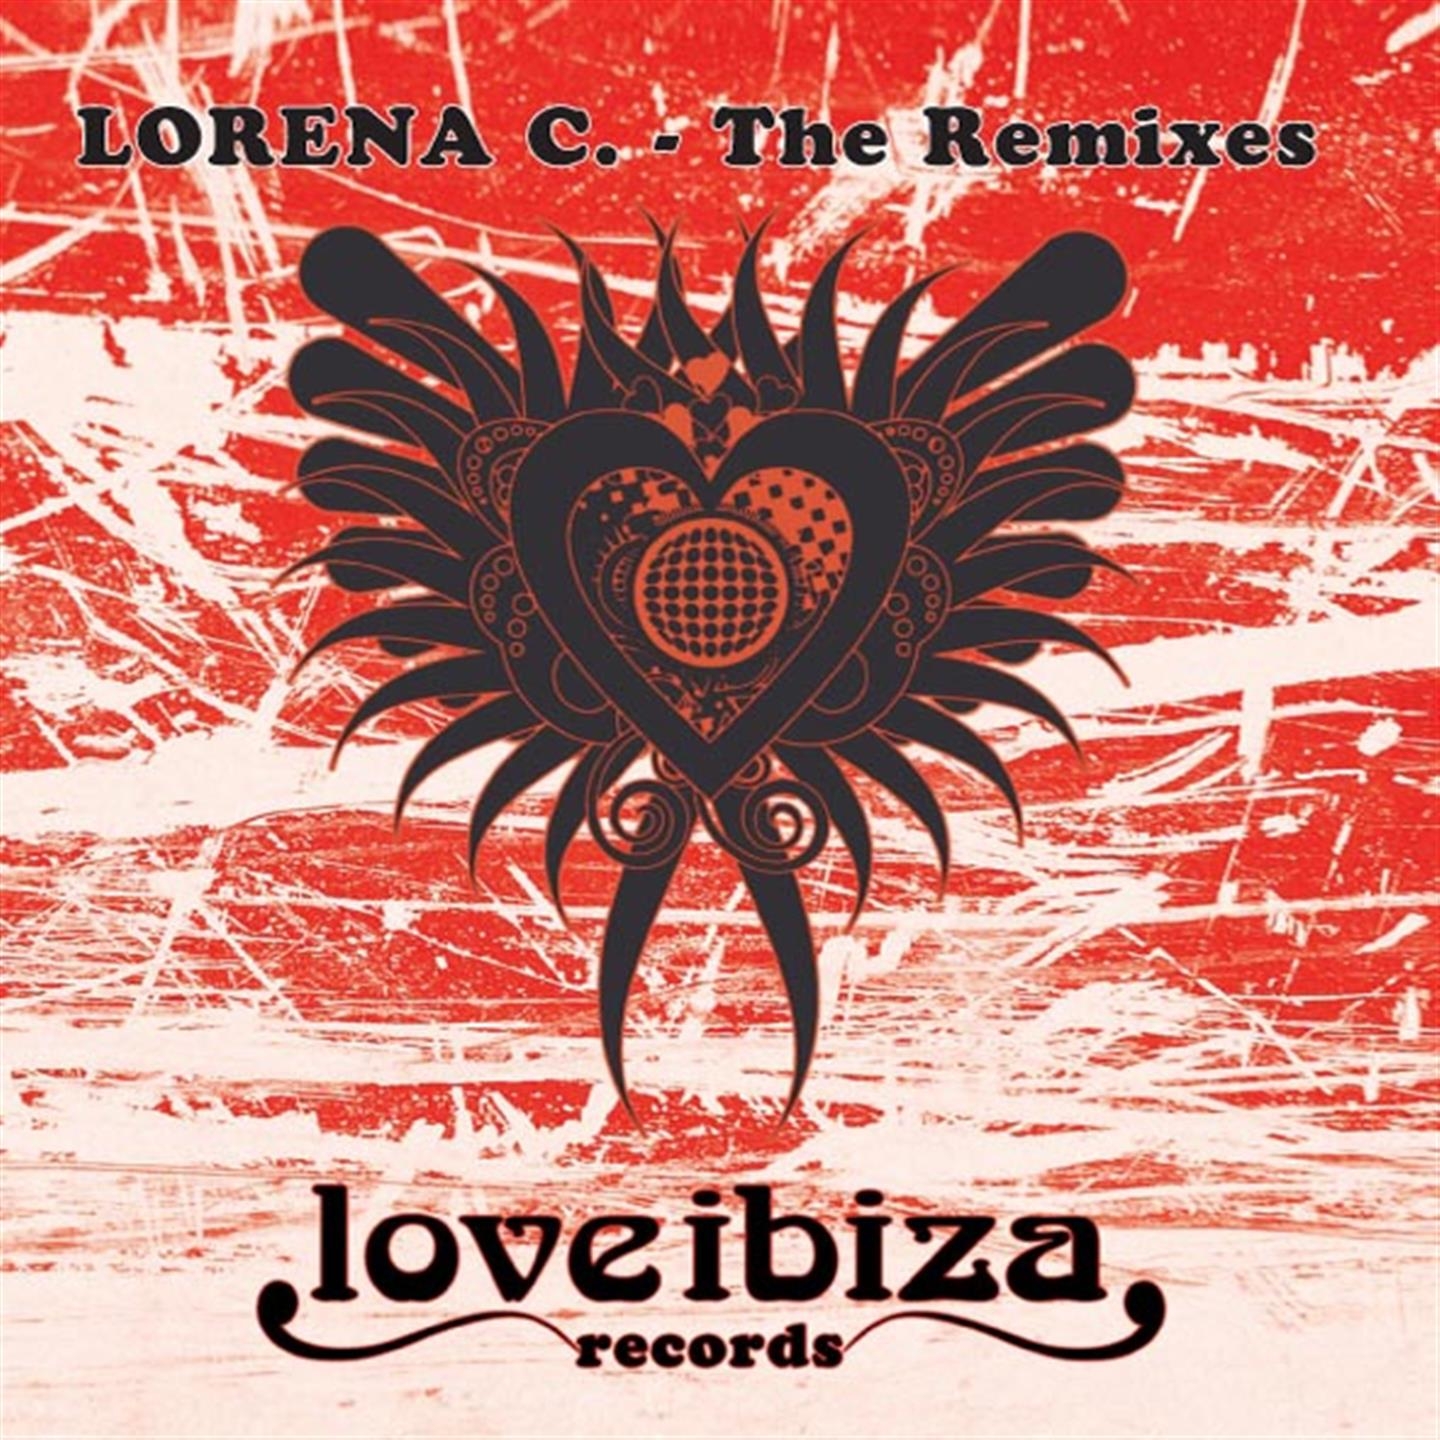 Rock Your Body (Barcelona Loves Ibiza Radio Remix)